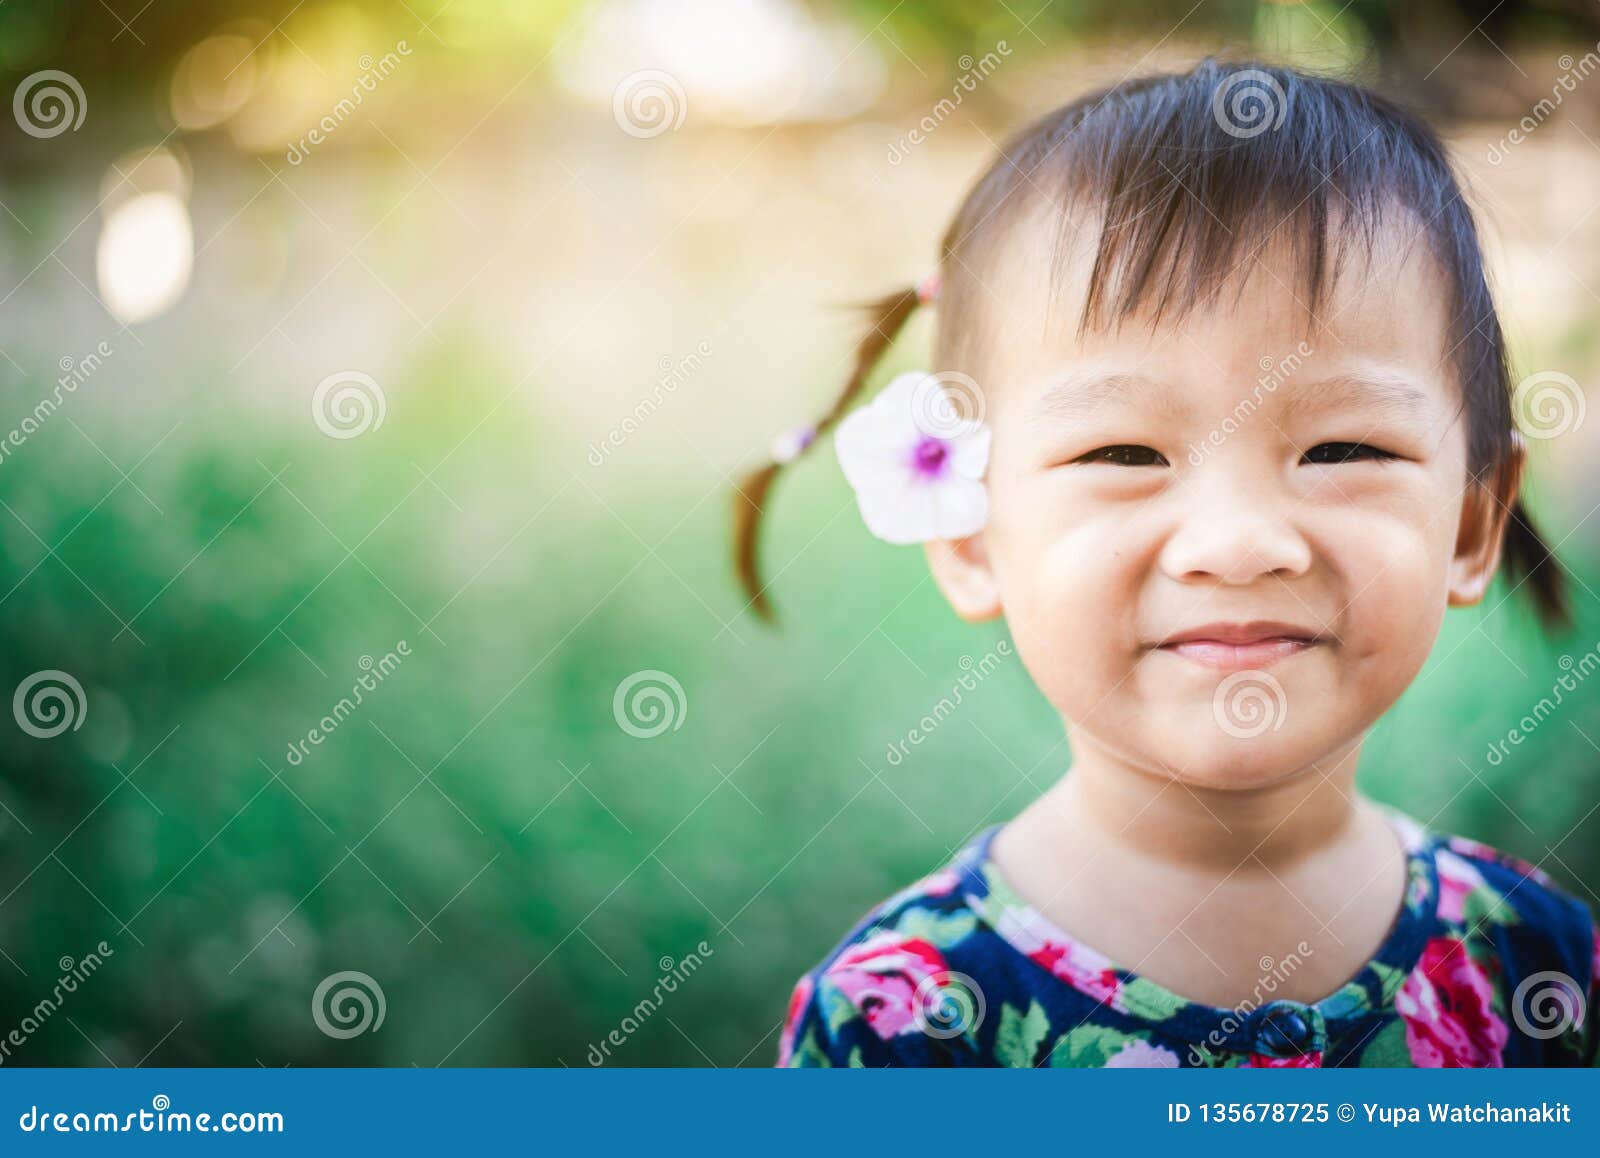 Sweet Asian Child Little Girl Smiling with Flower on Her Ear Stock ...